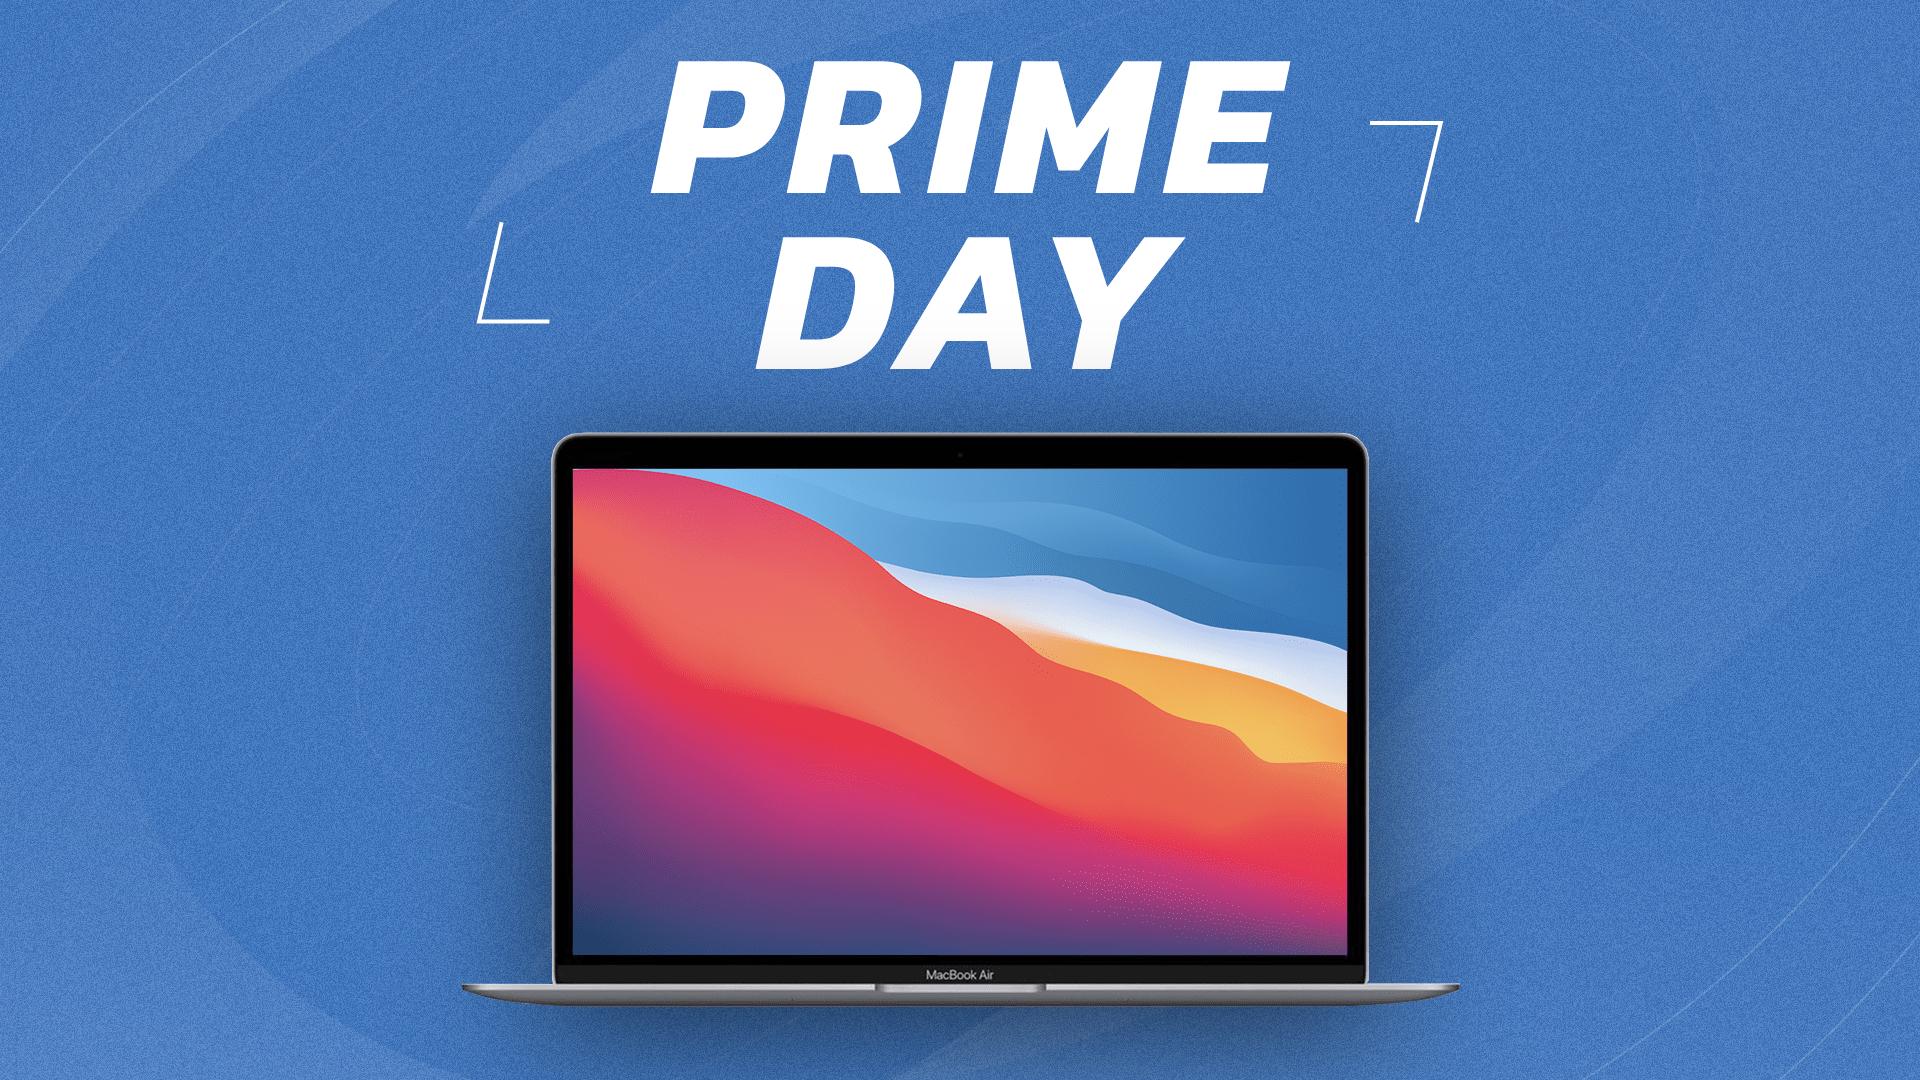 MAcBookj Air M1 Prime Day laptop on blue background